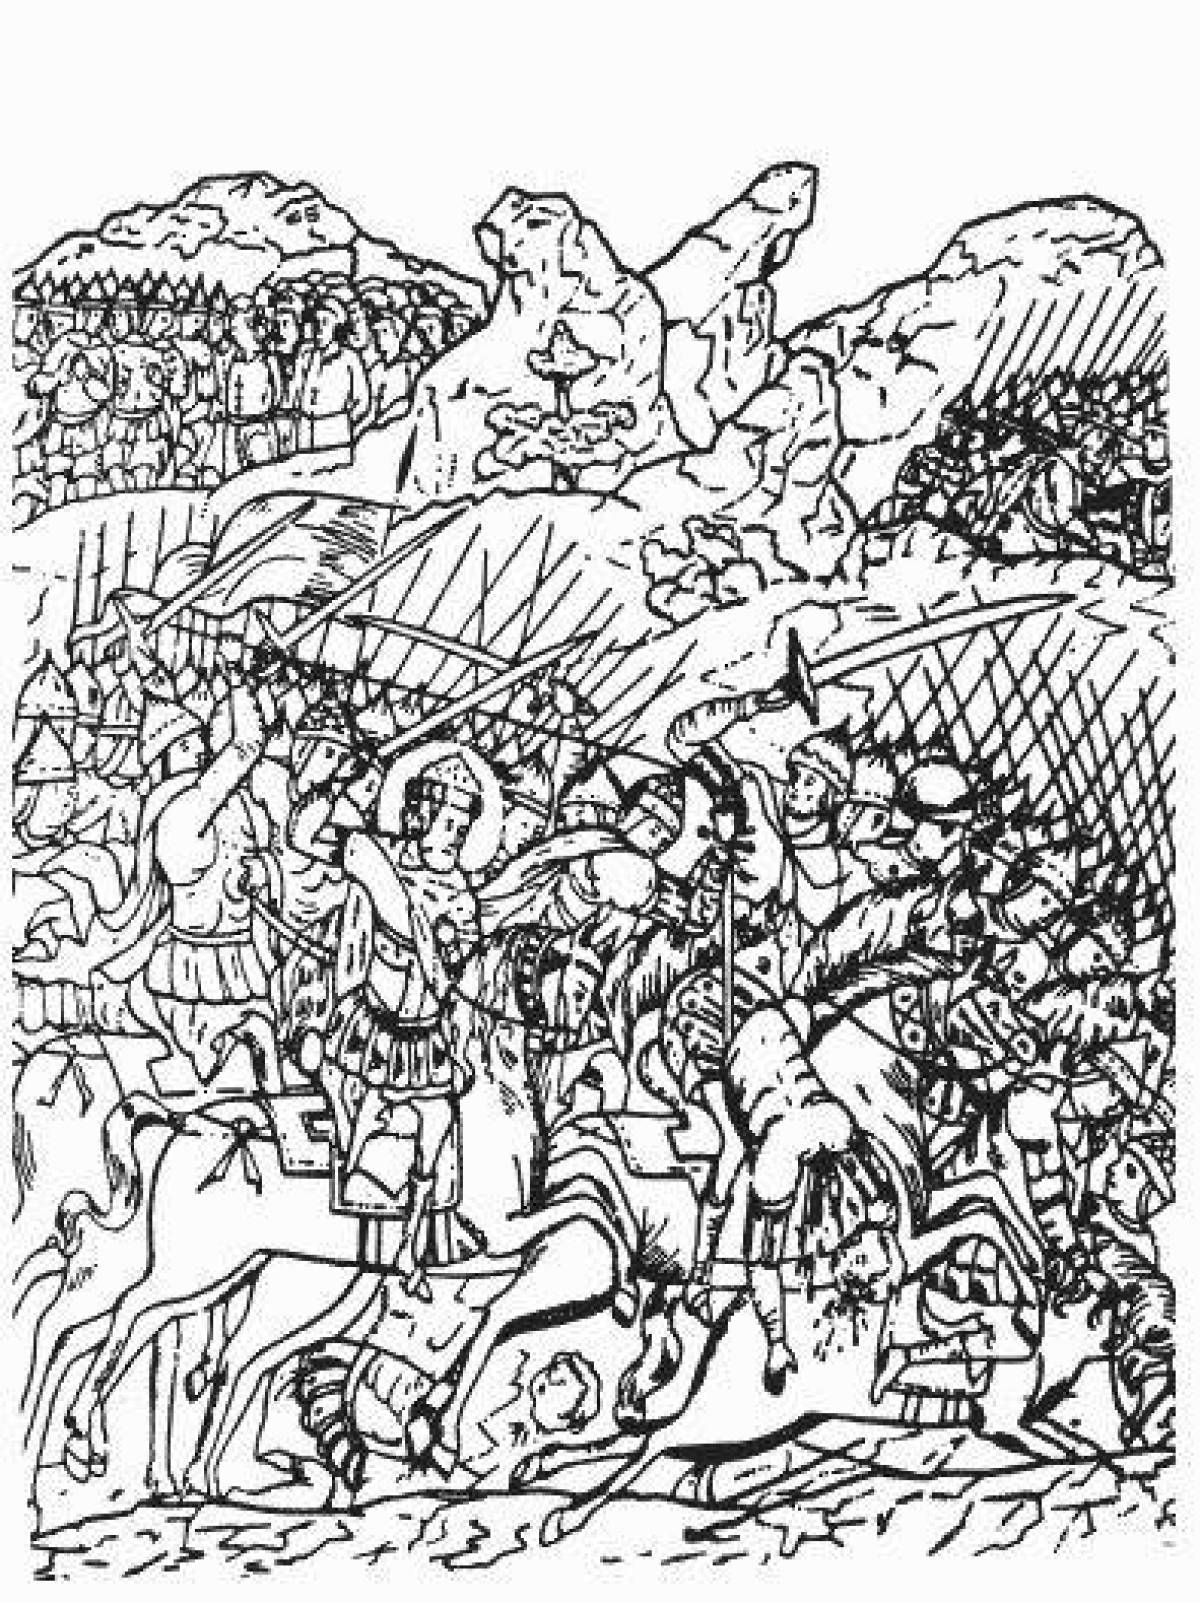 The majestic battle of Kulikovo